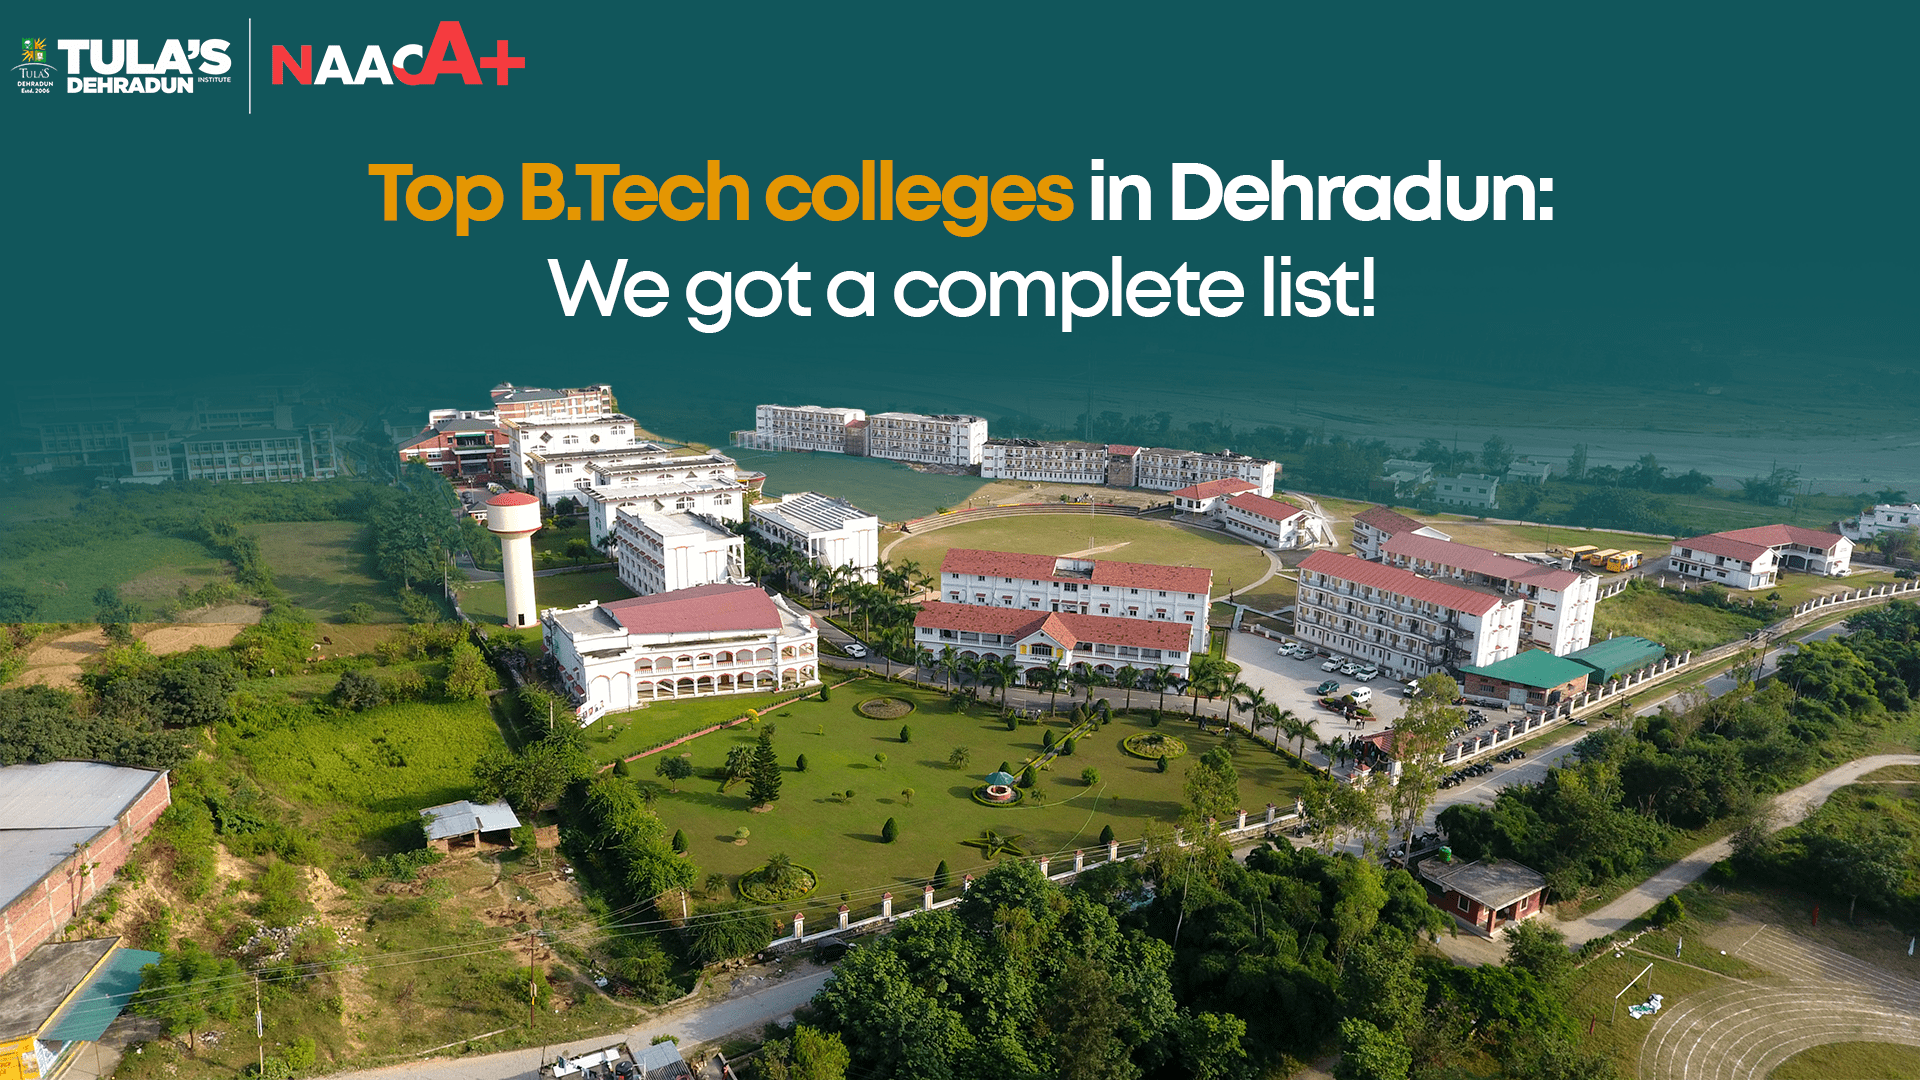 Top 4 B.Tech colleges in Dehradun: We got a complete list!